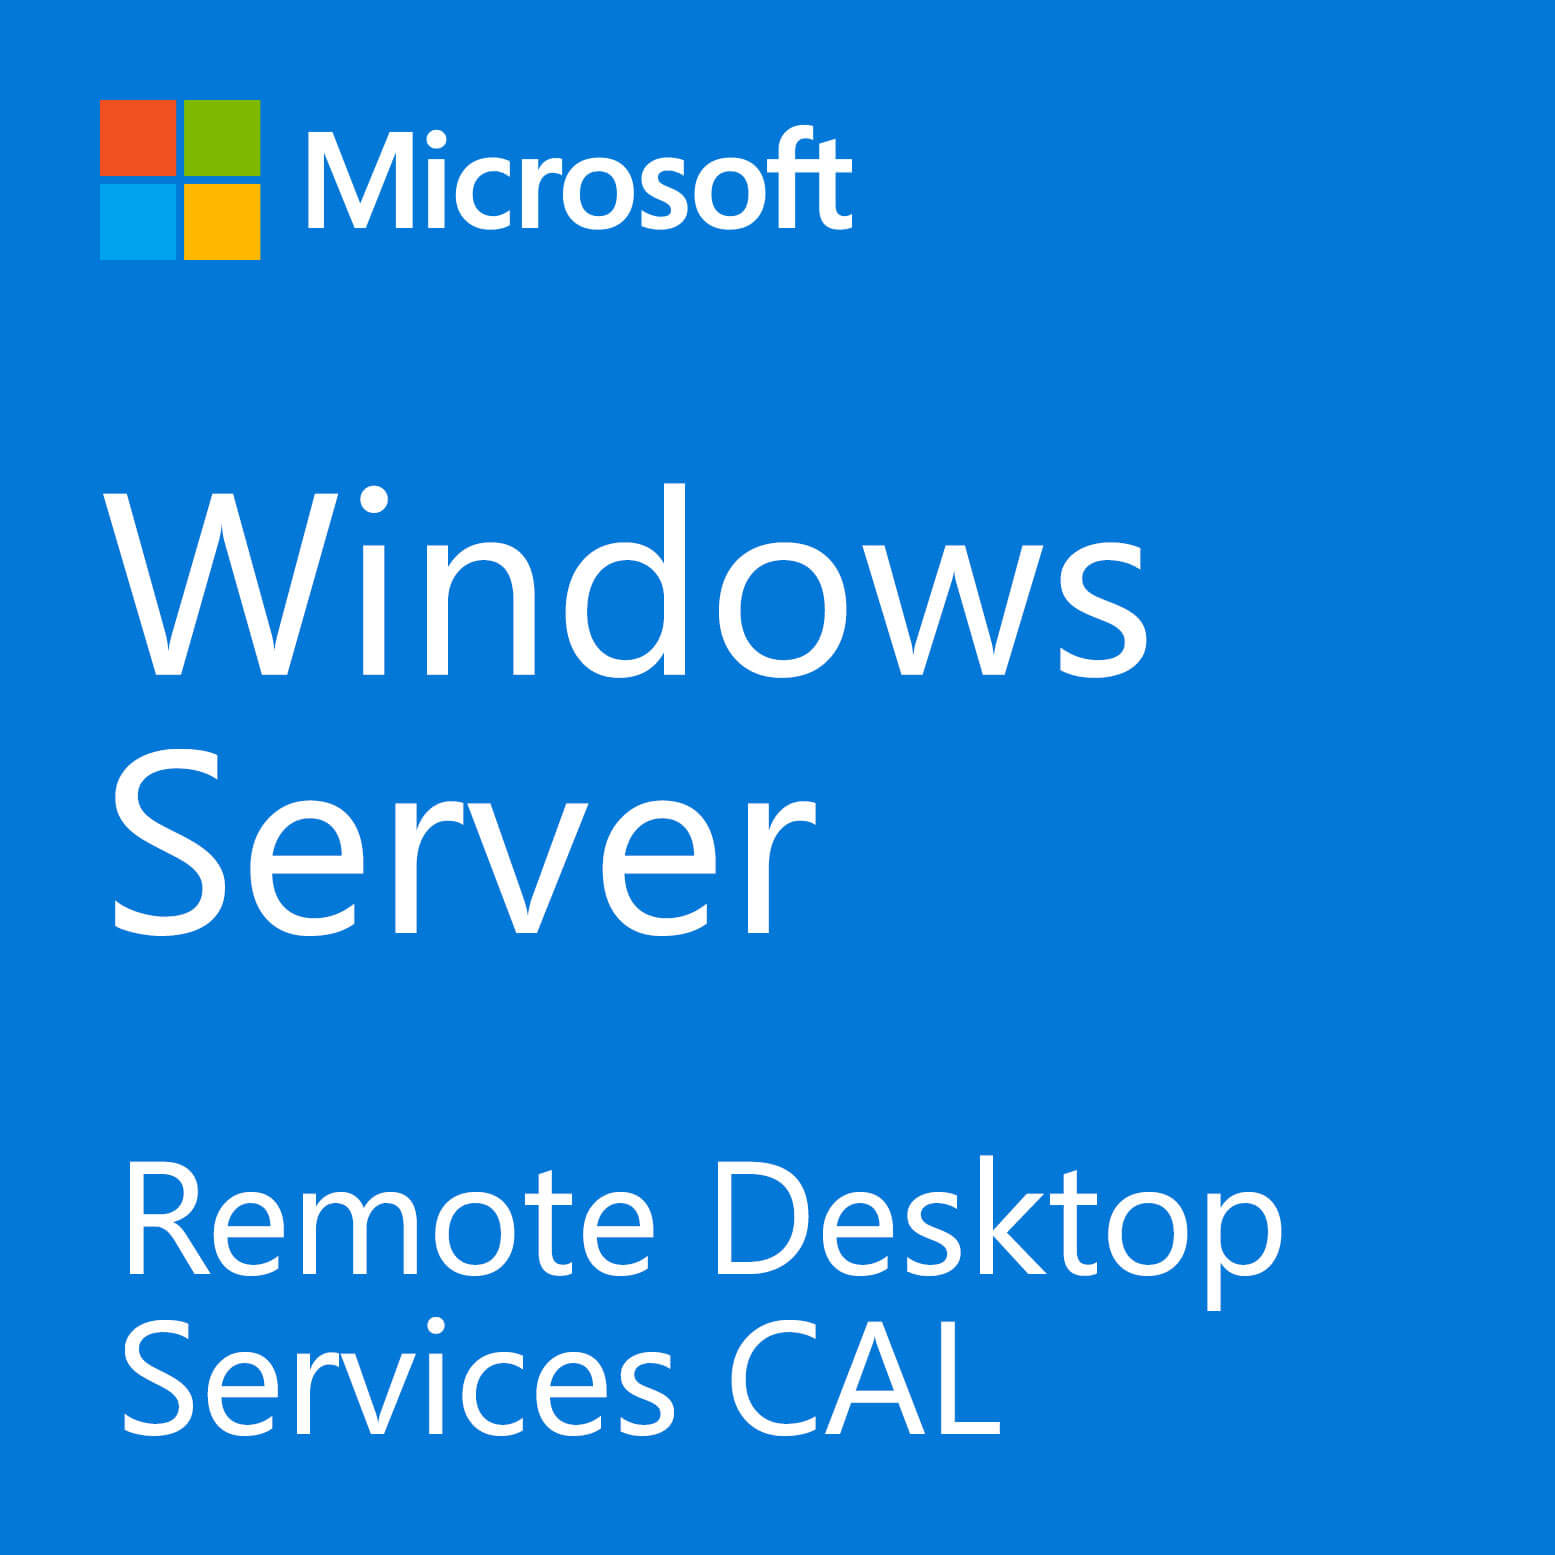 Windows Server Remote Desktop Services Cal